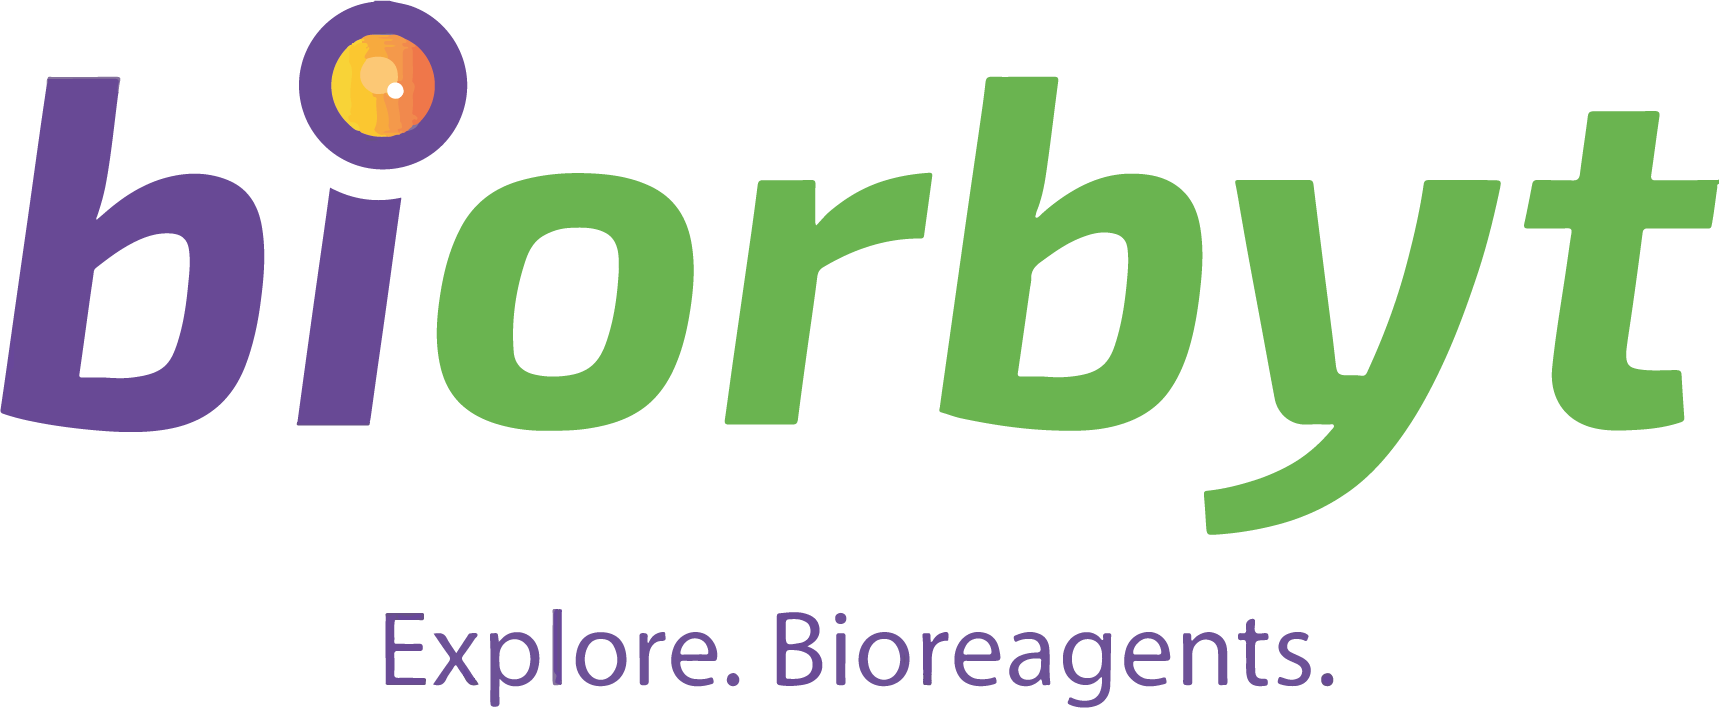 Biorbyt - Bioreagents